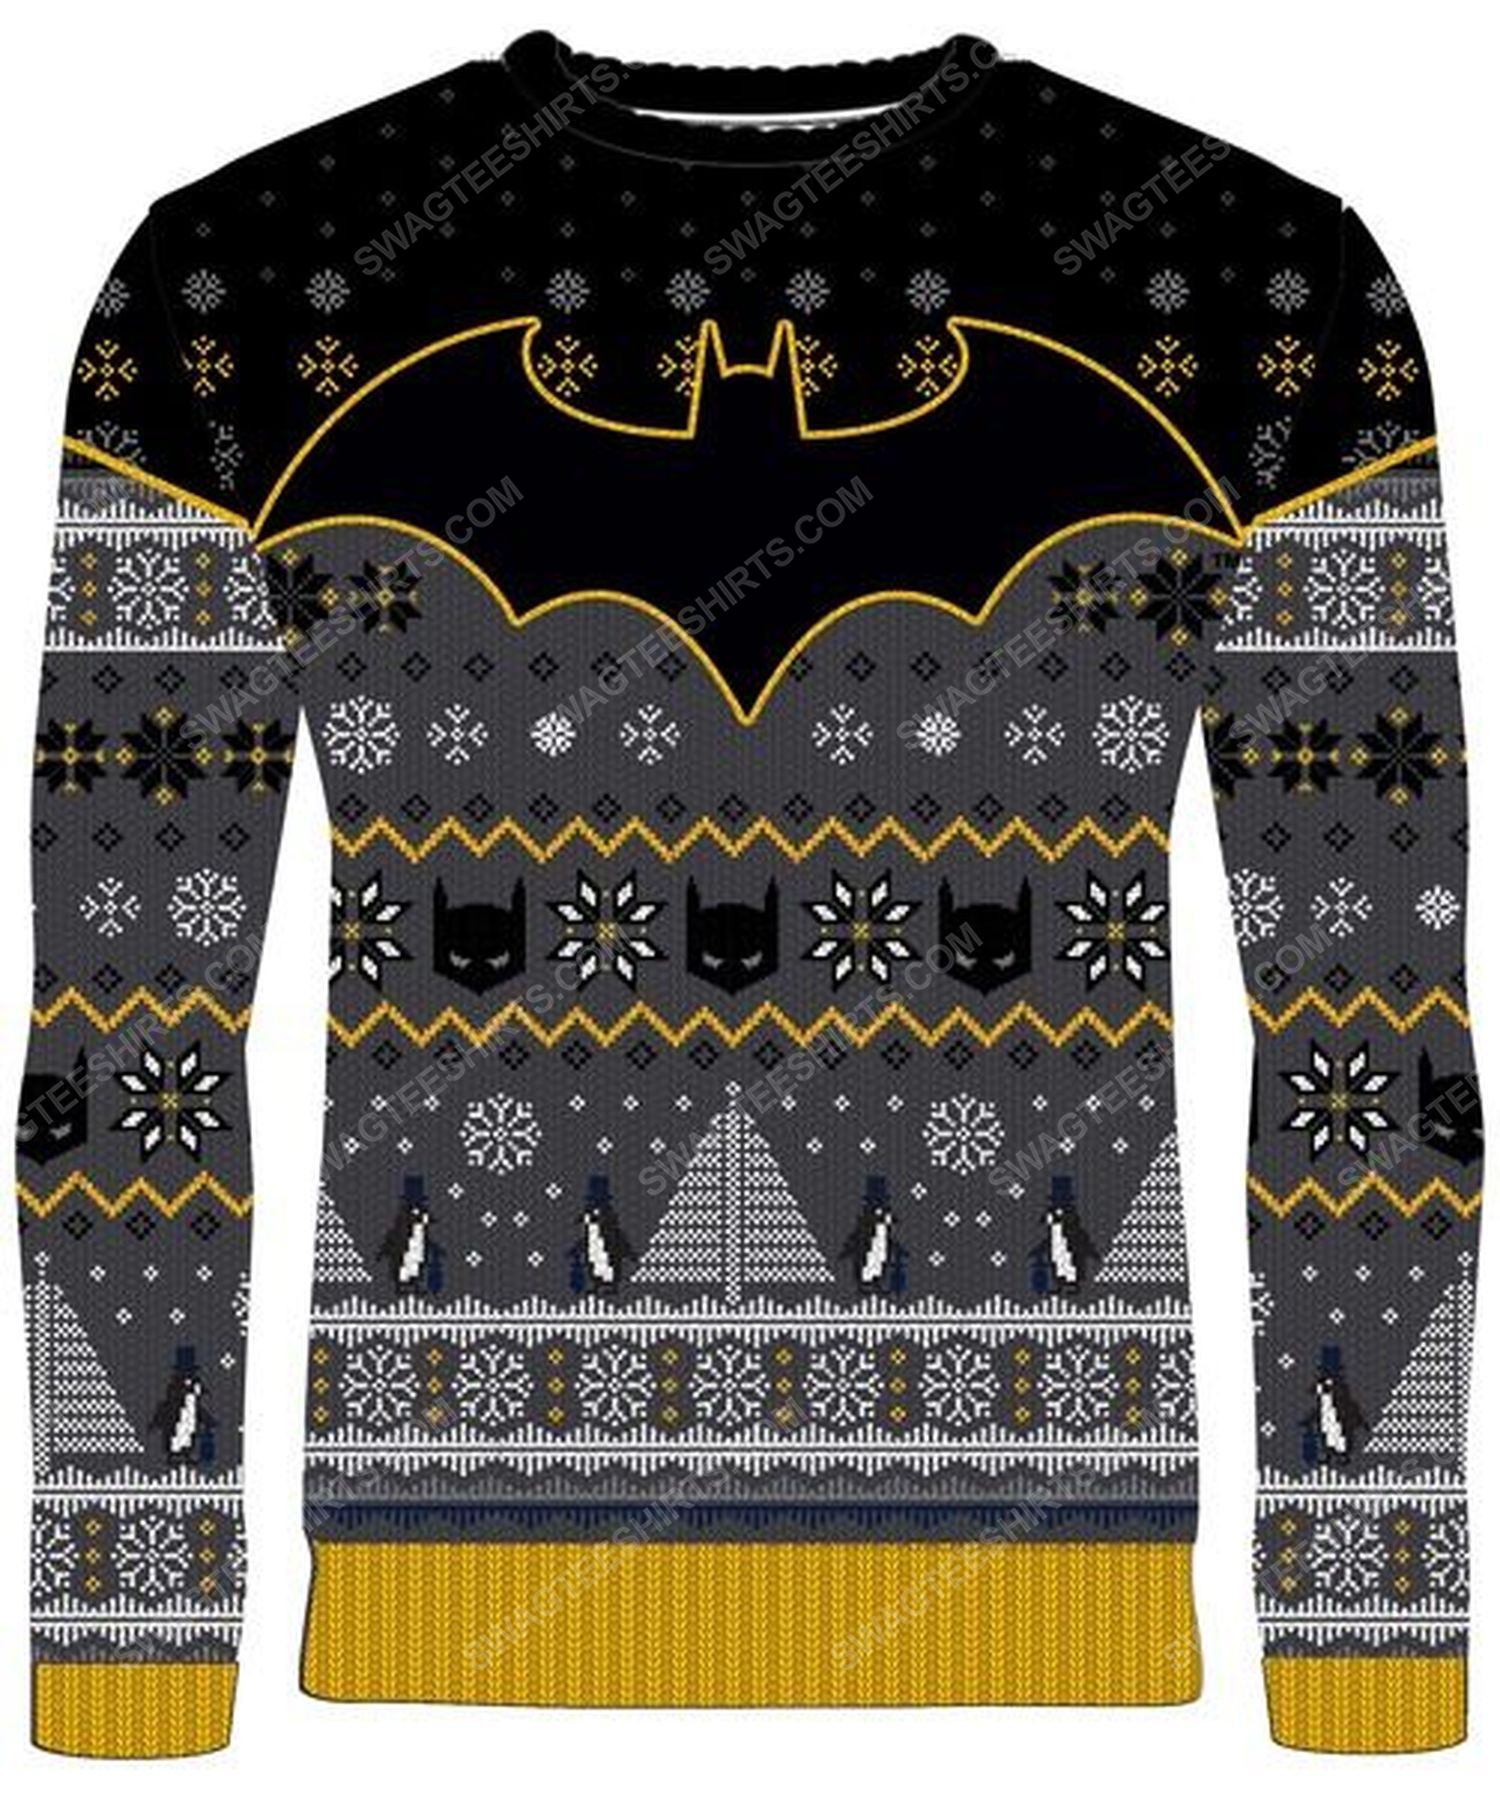 Goodwill in gotham batman full print ugly christmas sweater 2 - Copy (2)